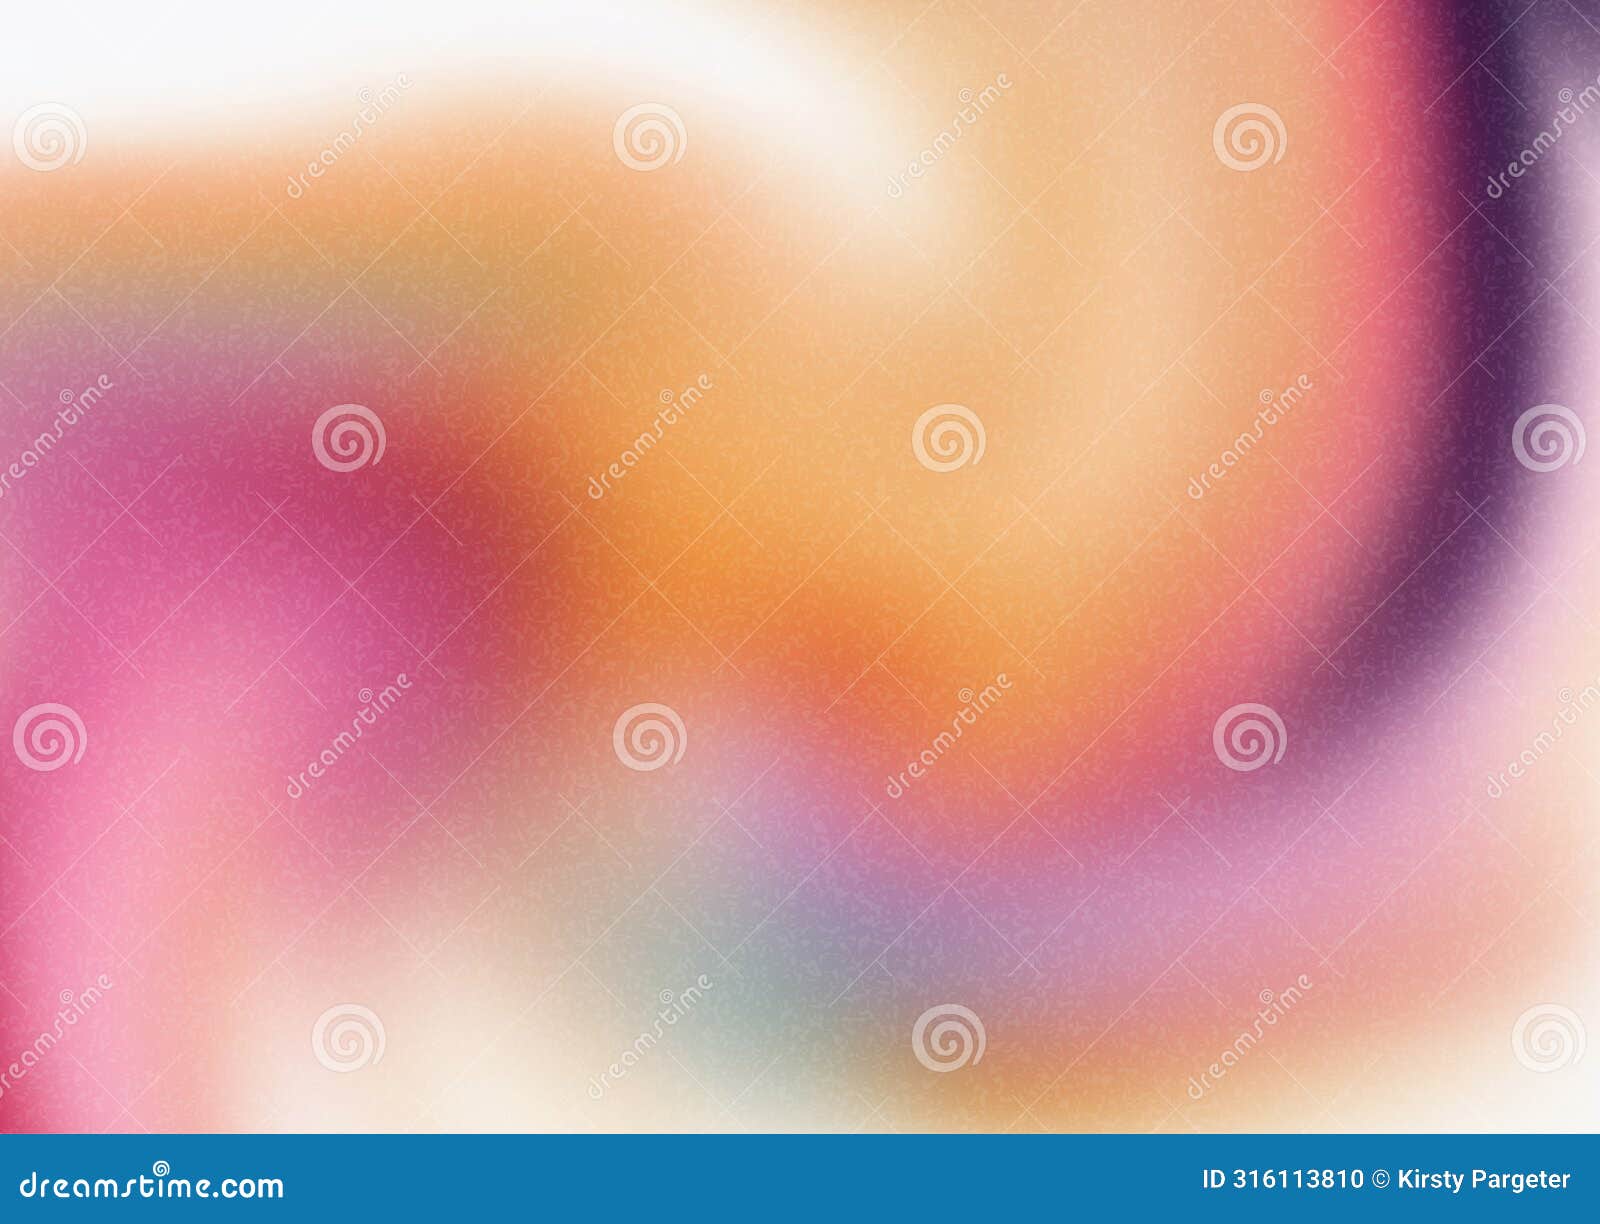 gradient swirl blur background with grainy overlay